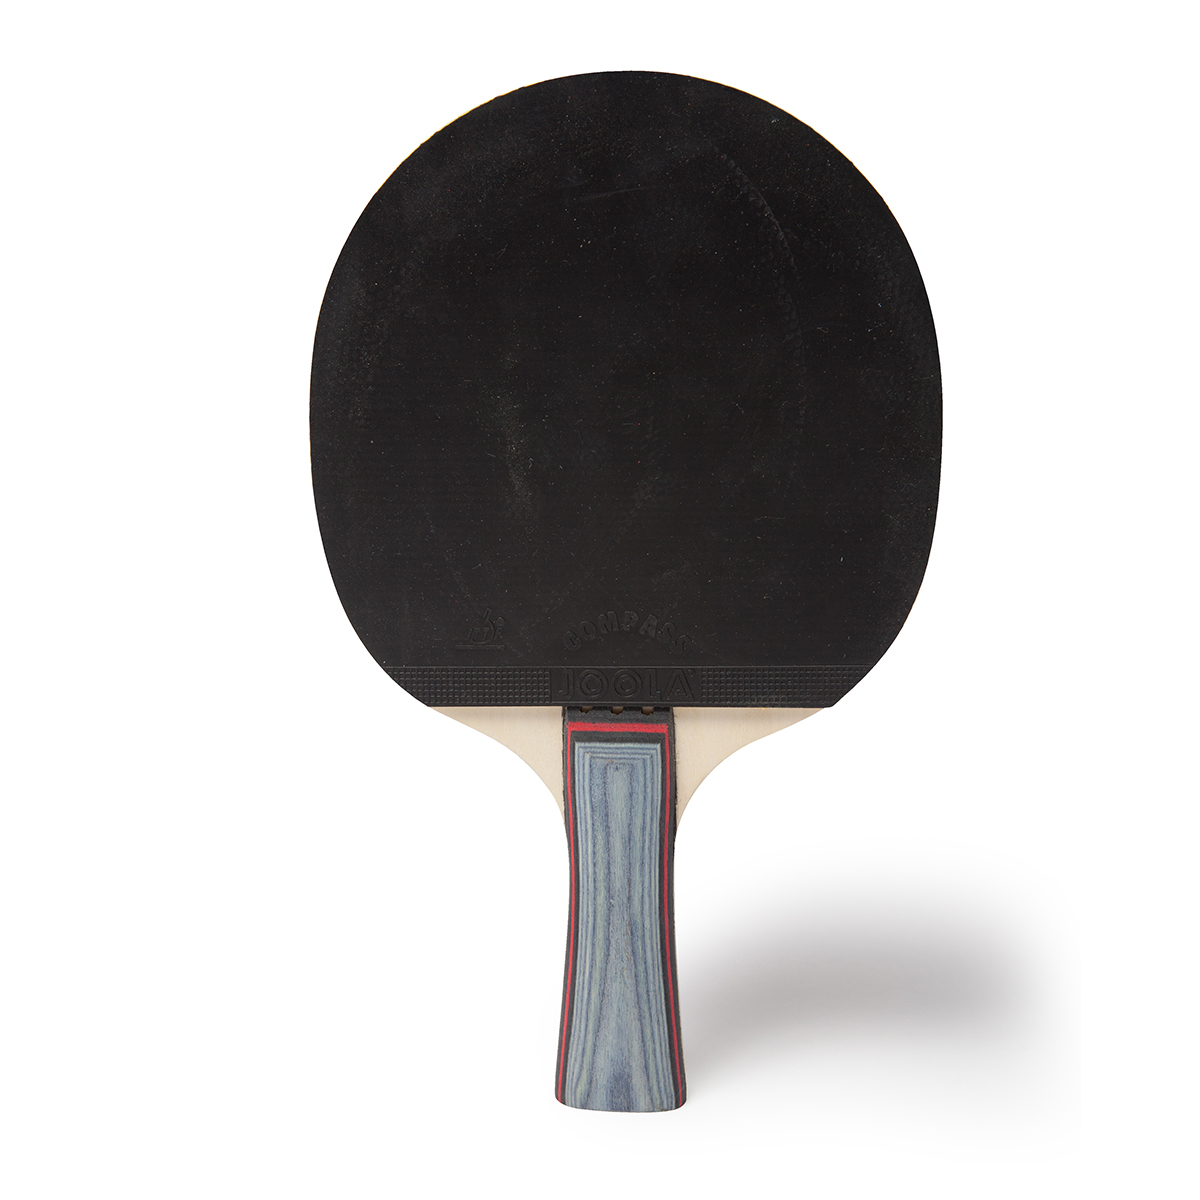 Dunlop Blackstorm Spin 300 Table Tennis Racket Bat Rubber Blade Ping Pong Paddle 